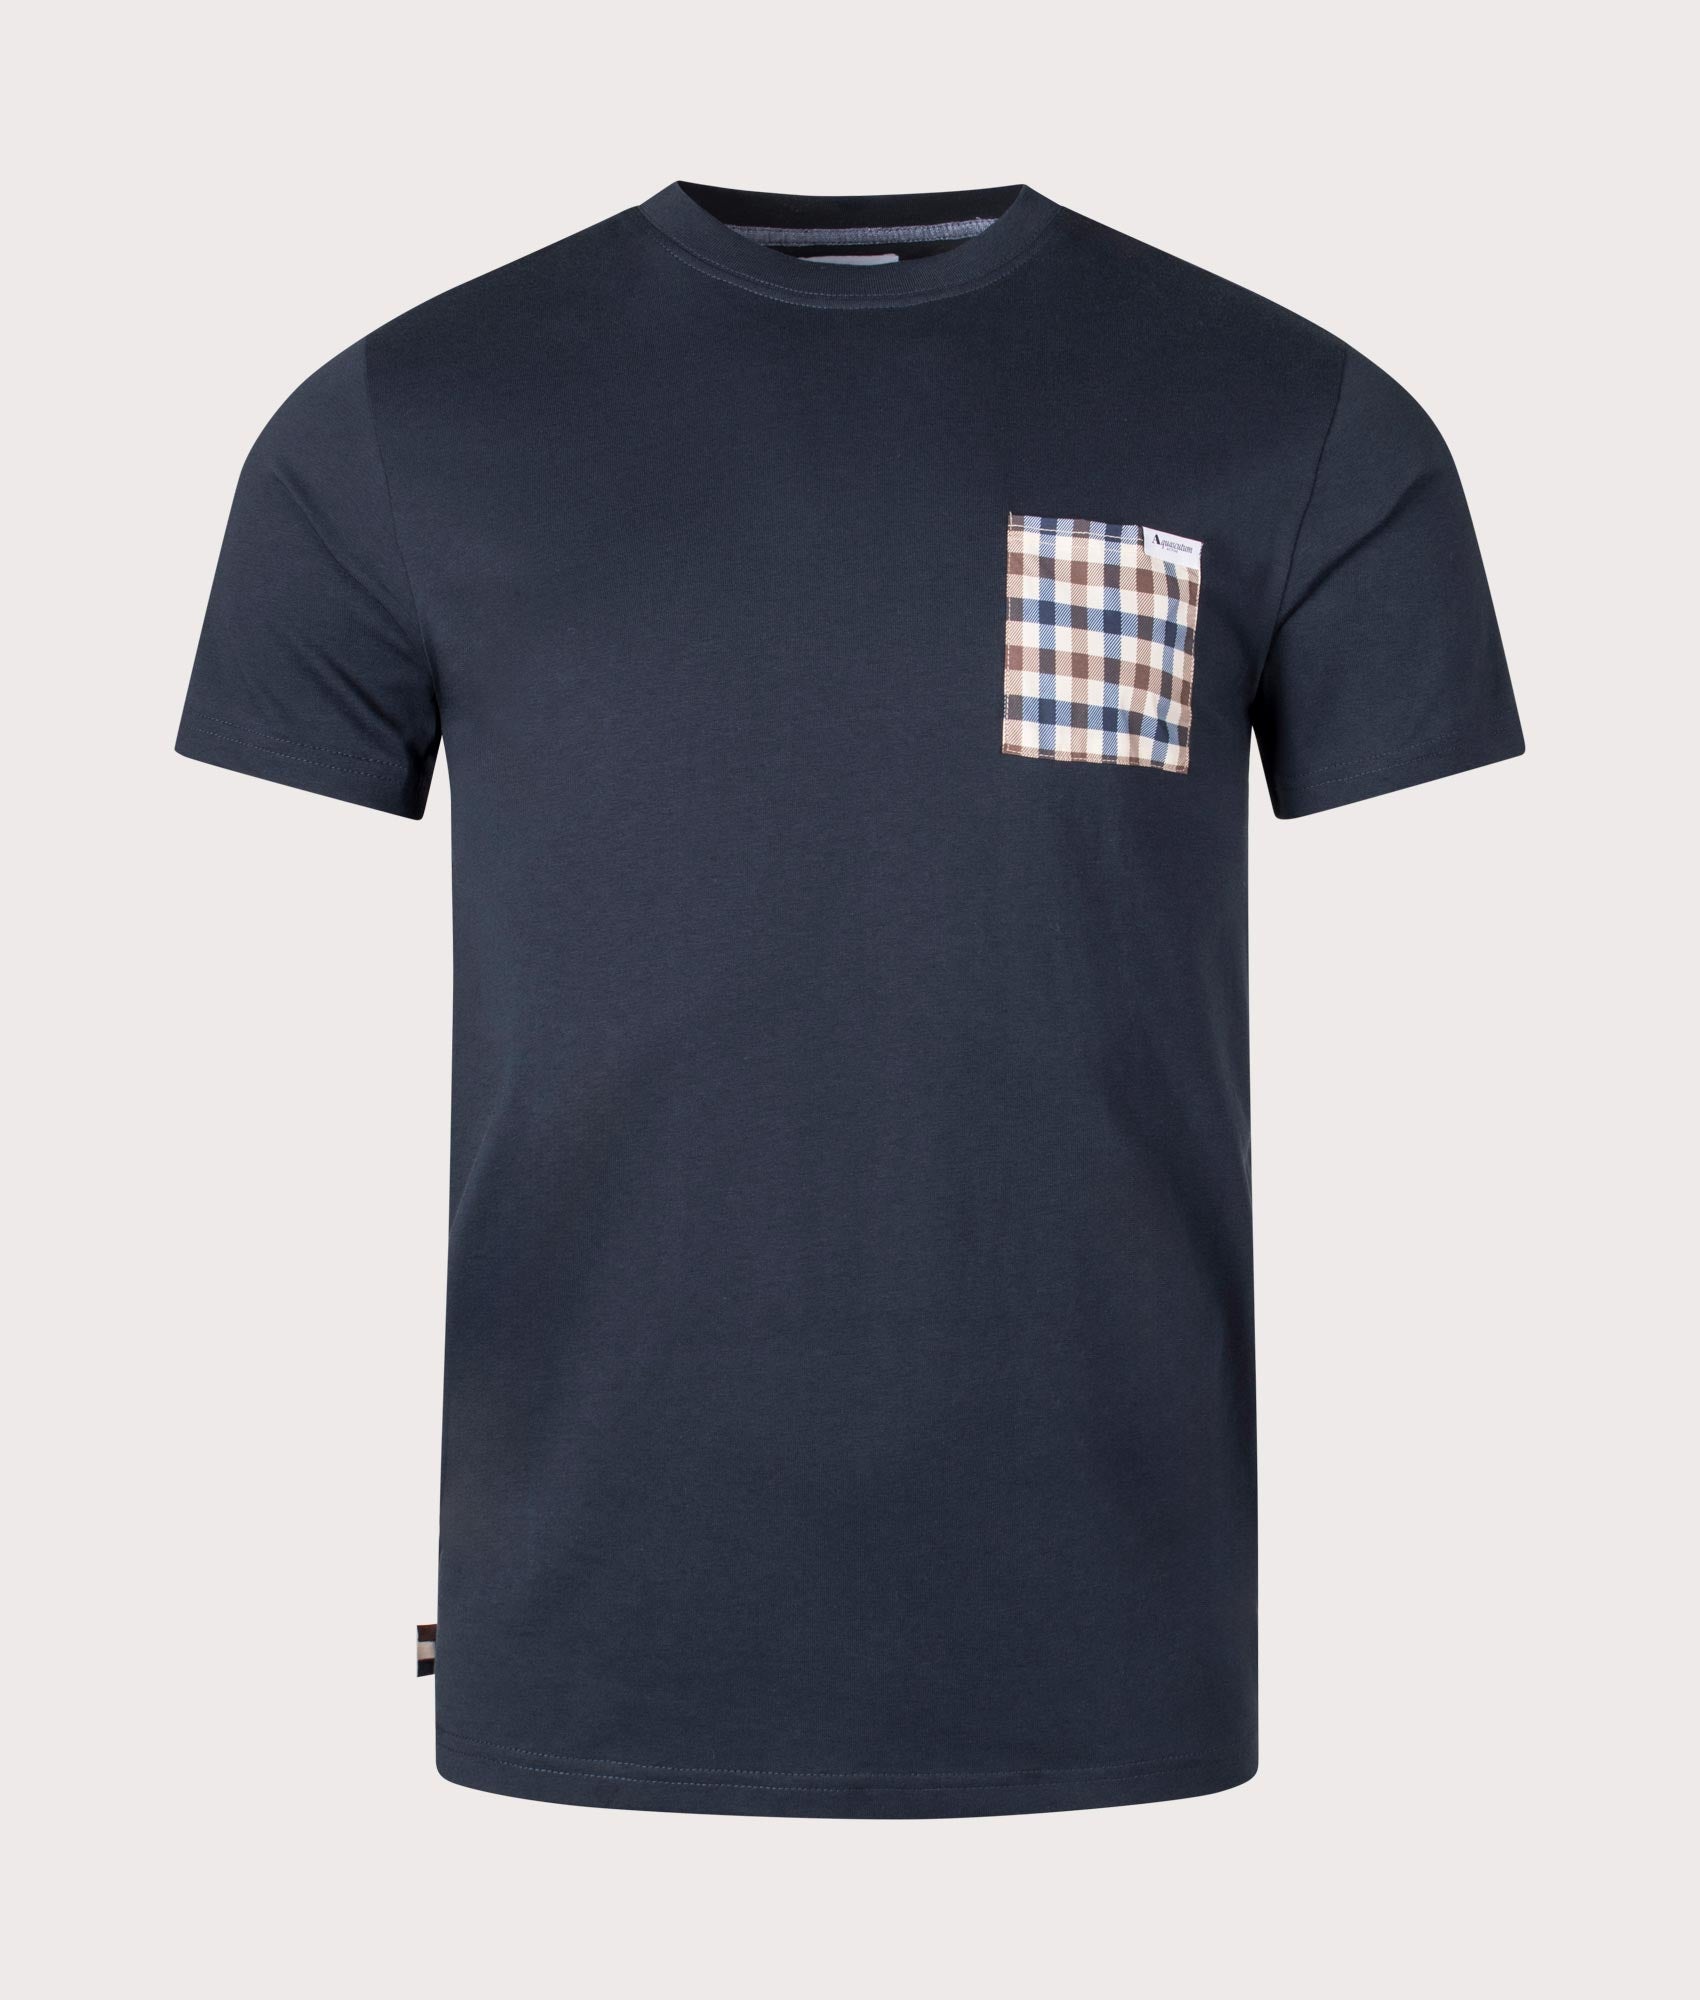 Aquascutum Mens Active Club Check Pocket T-Shirt - Colour: 11 Navy - Size: XXL